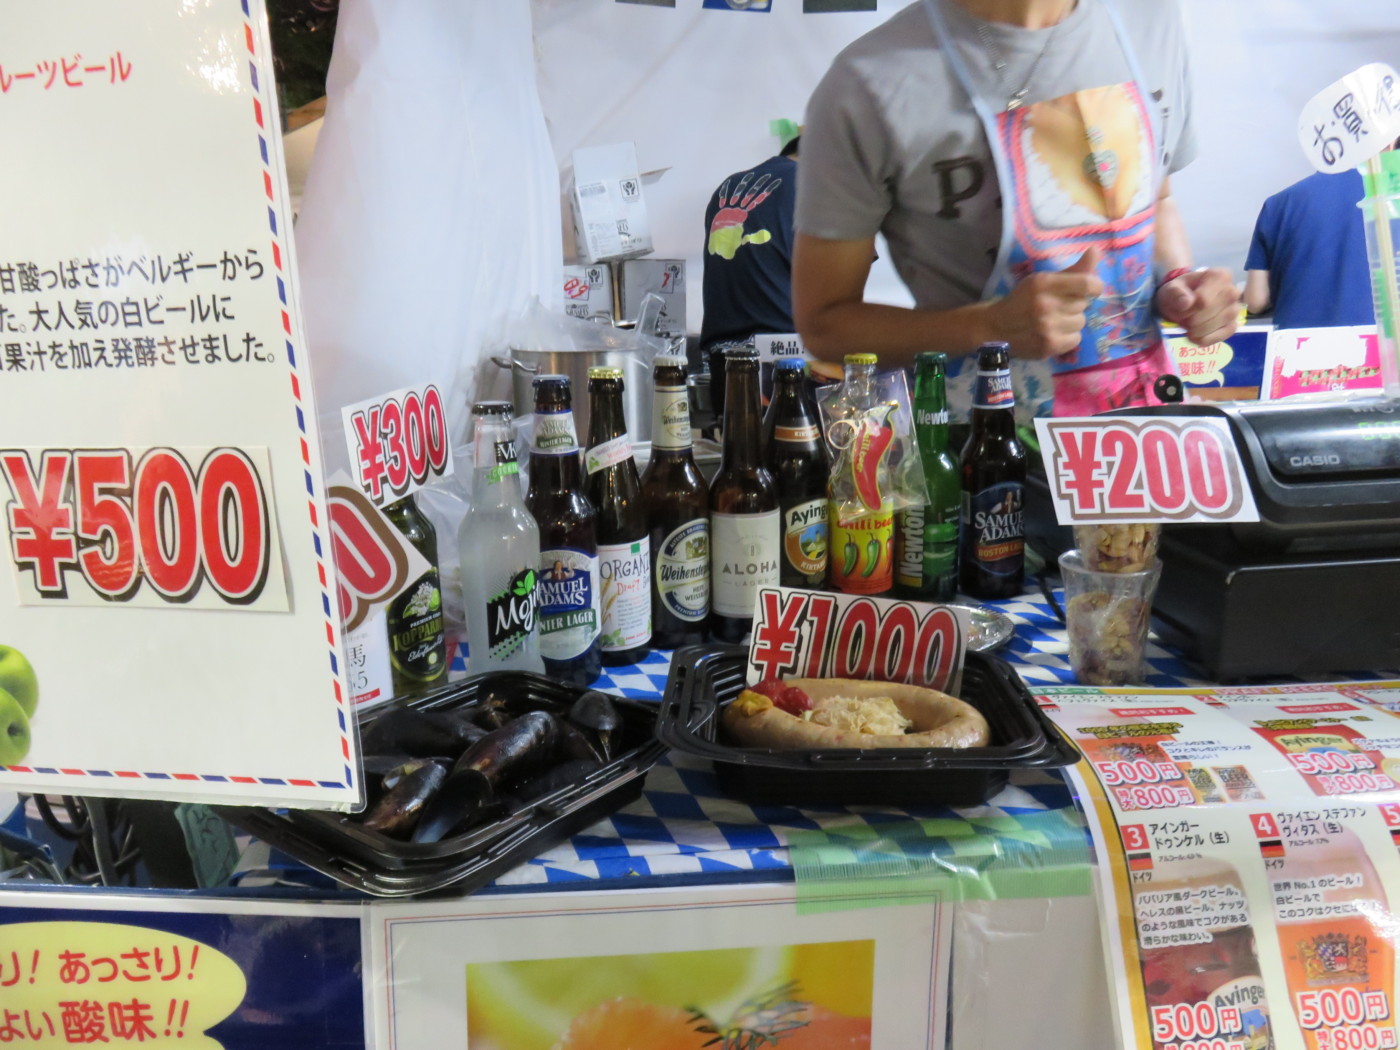 News 日本ビール株式会社 Part 2